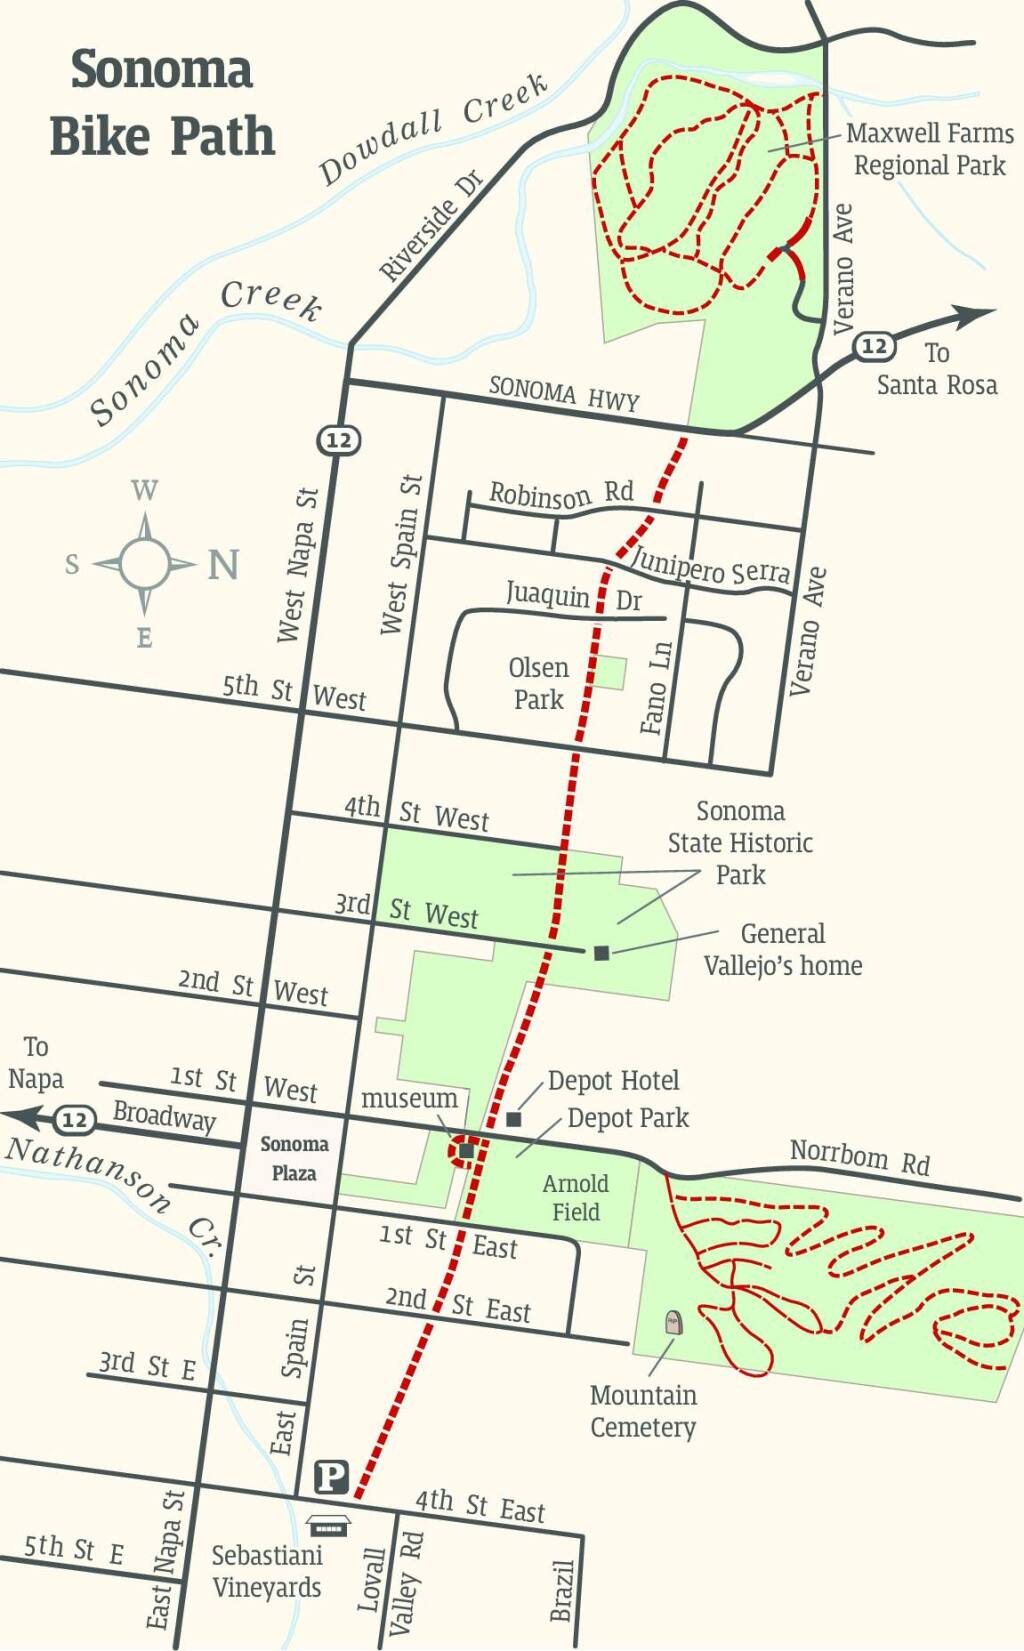 Sonoma Bike Path, California - 173 Reviews, Map